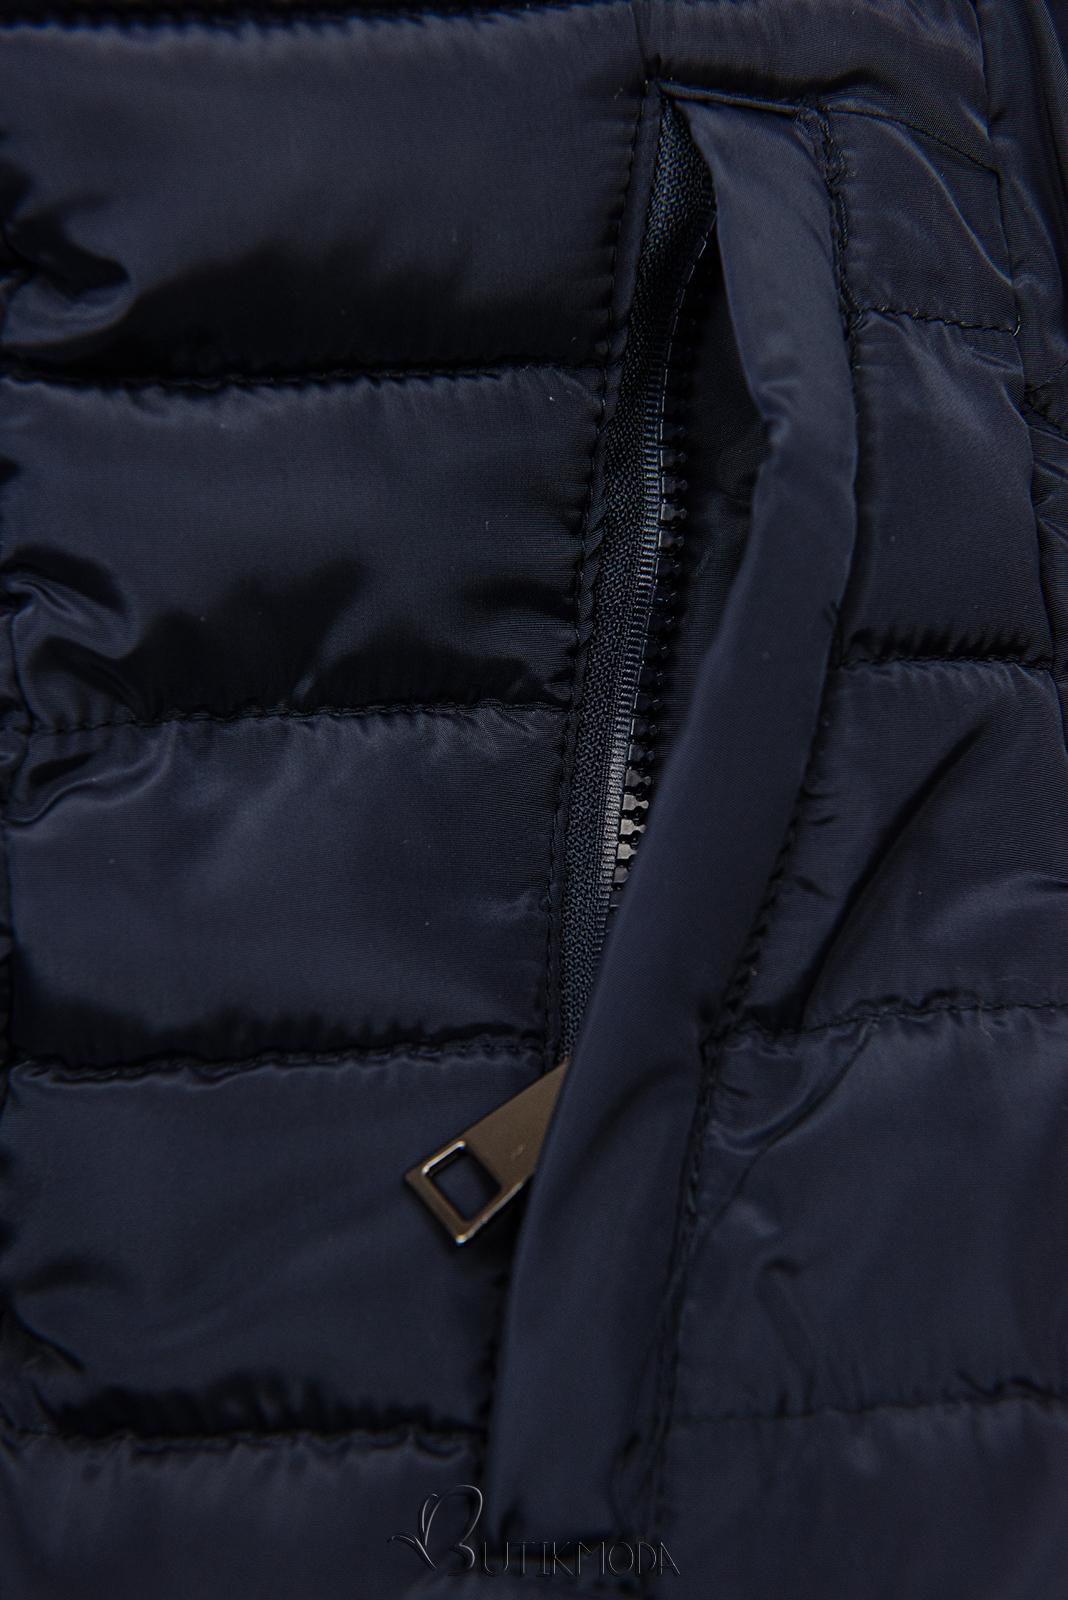 Dark blue quilted jacket for autumn/winter